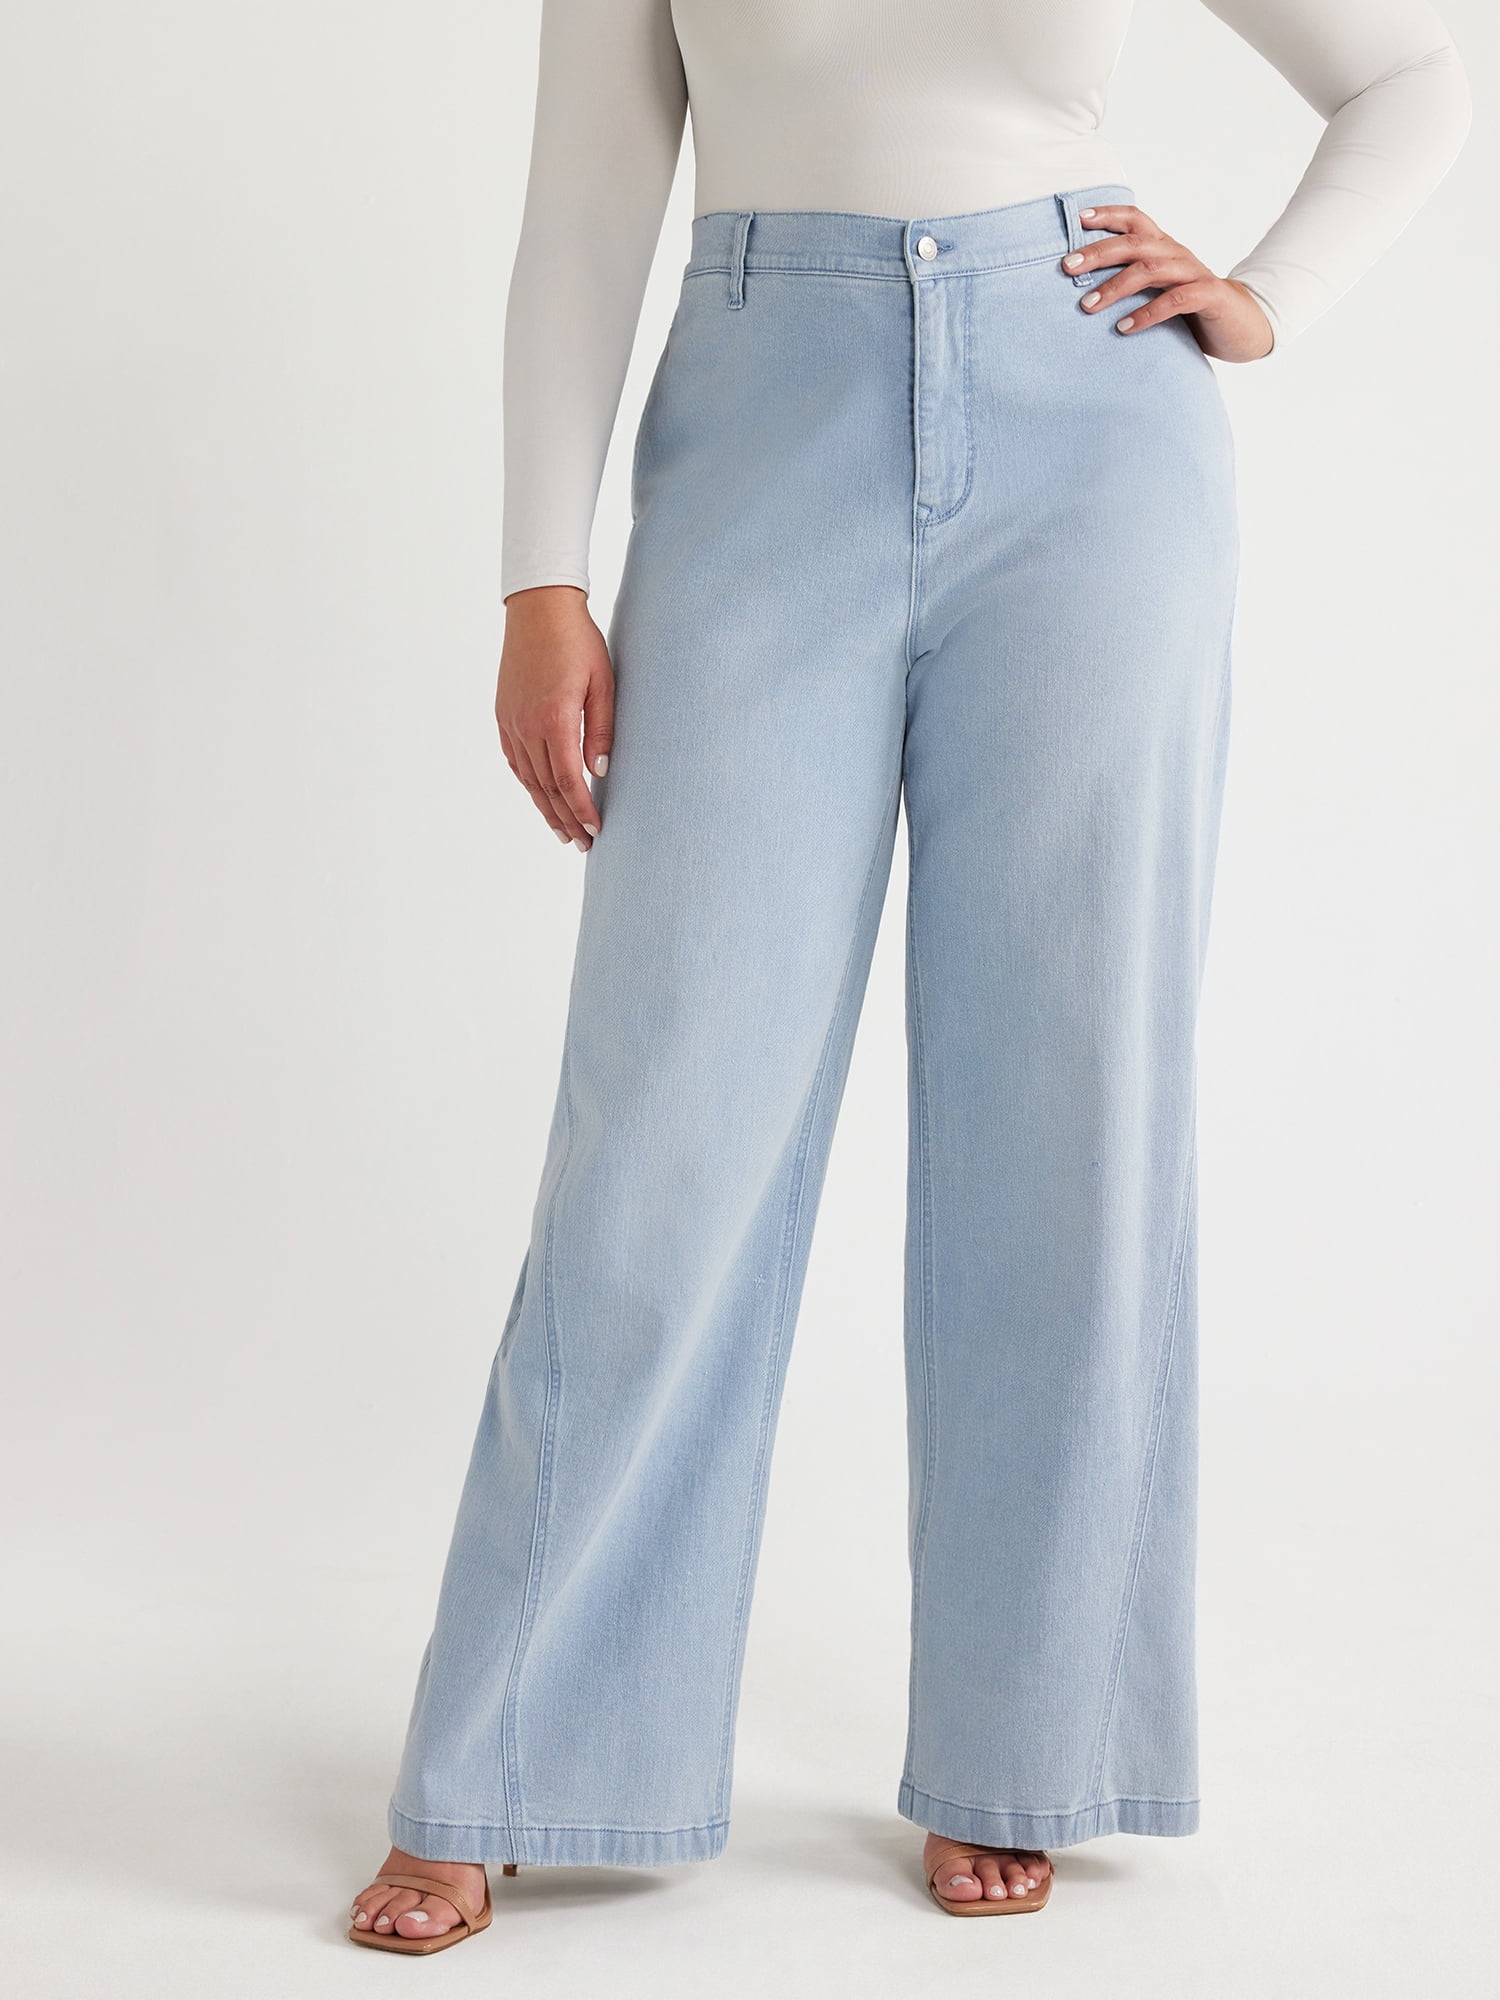 Sofia Jeans Women's Plus Size Diana Palazzo Super High Rise Seamed Jeans,  32.5 Inseam, Sizes 14W-28W 